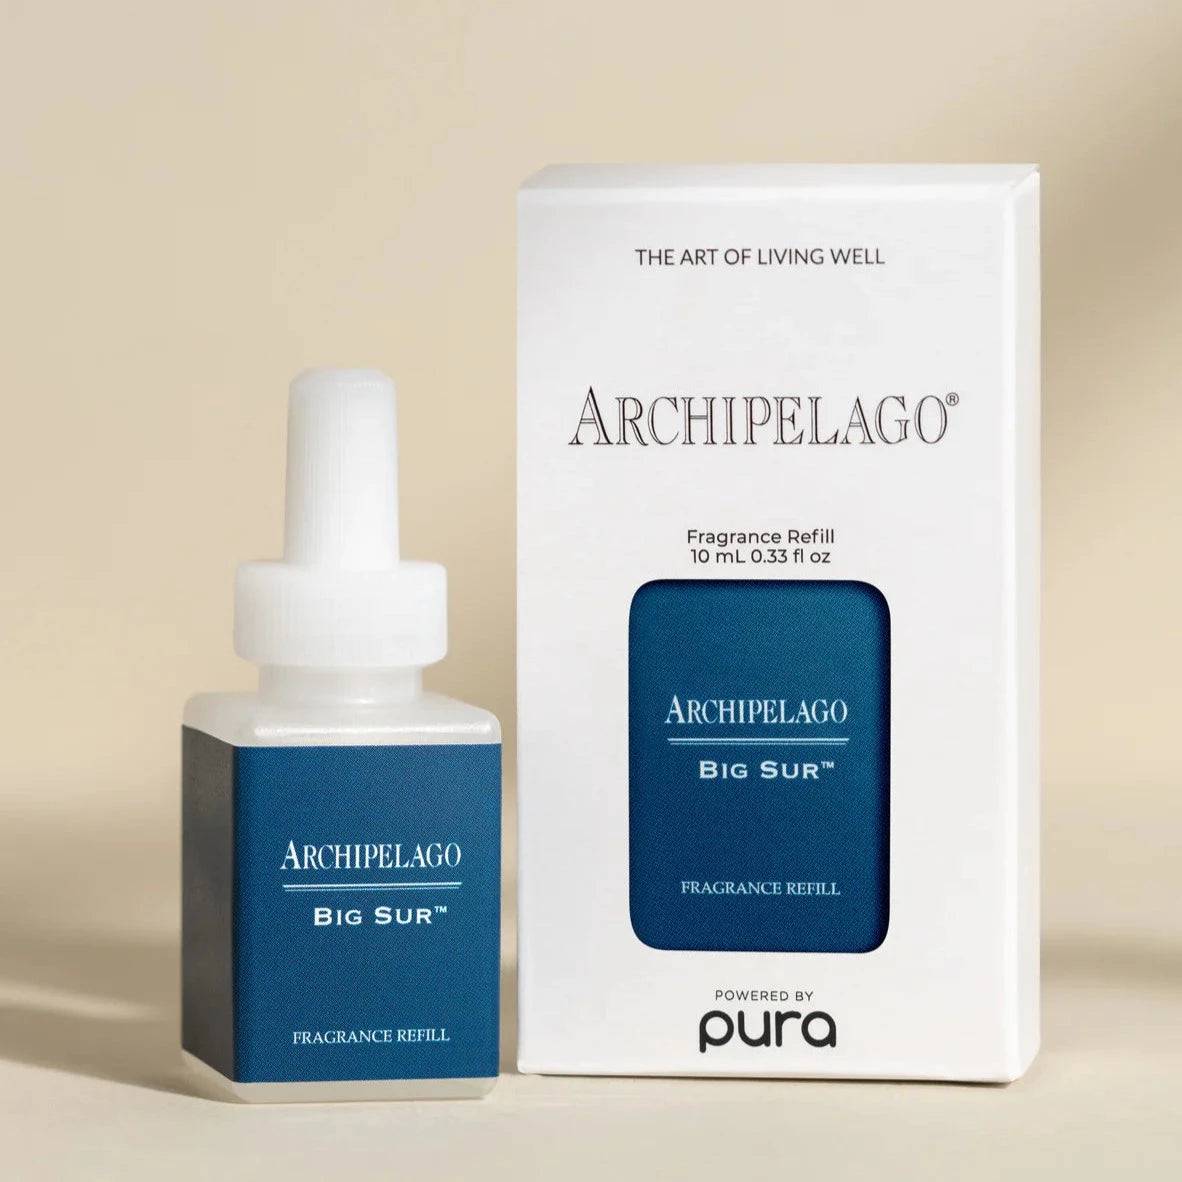 Big Sur Pura Fragrance Refill by Archipelago - The Preppy Bunny